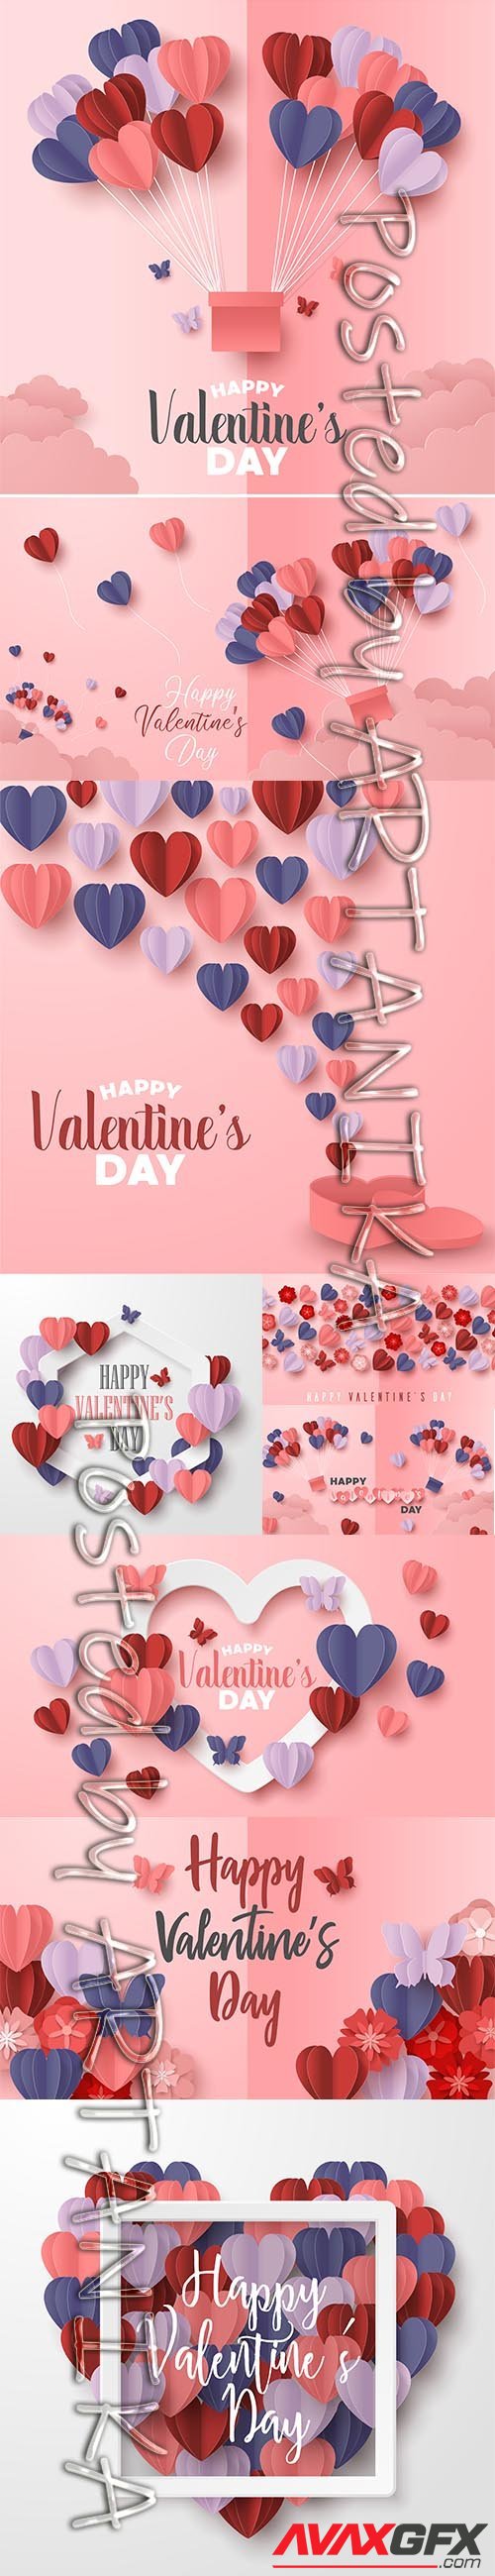 Happy Valentines Day Illustration Vector Set Vol 8